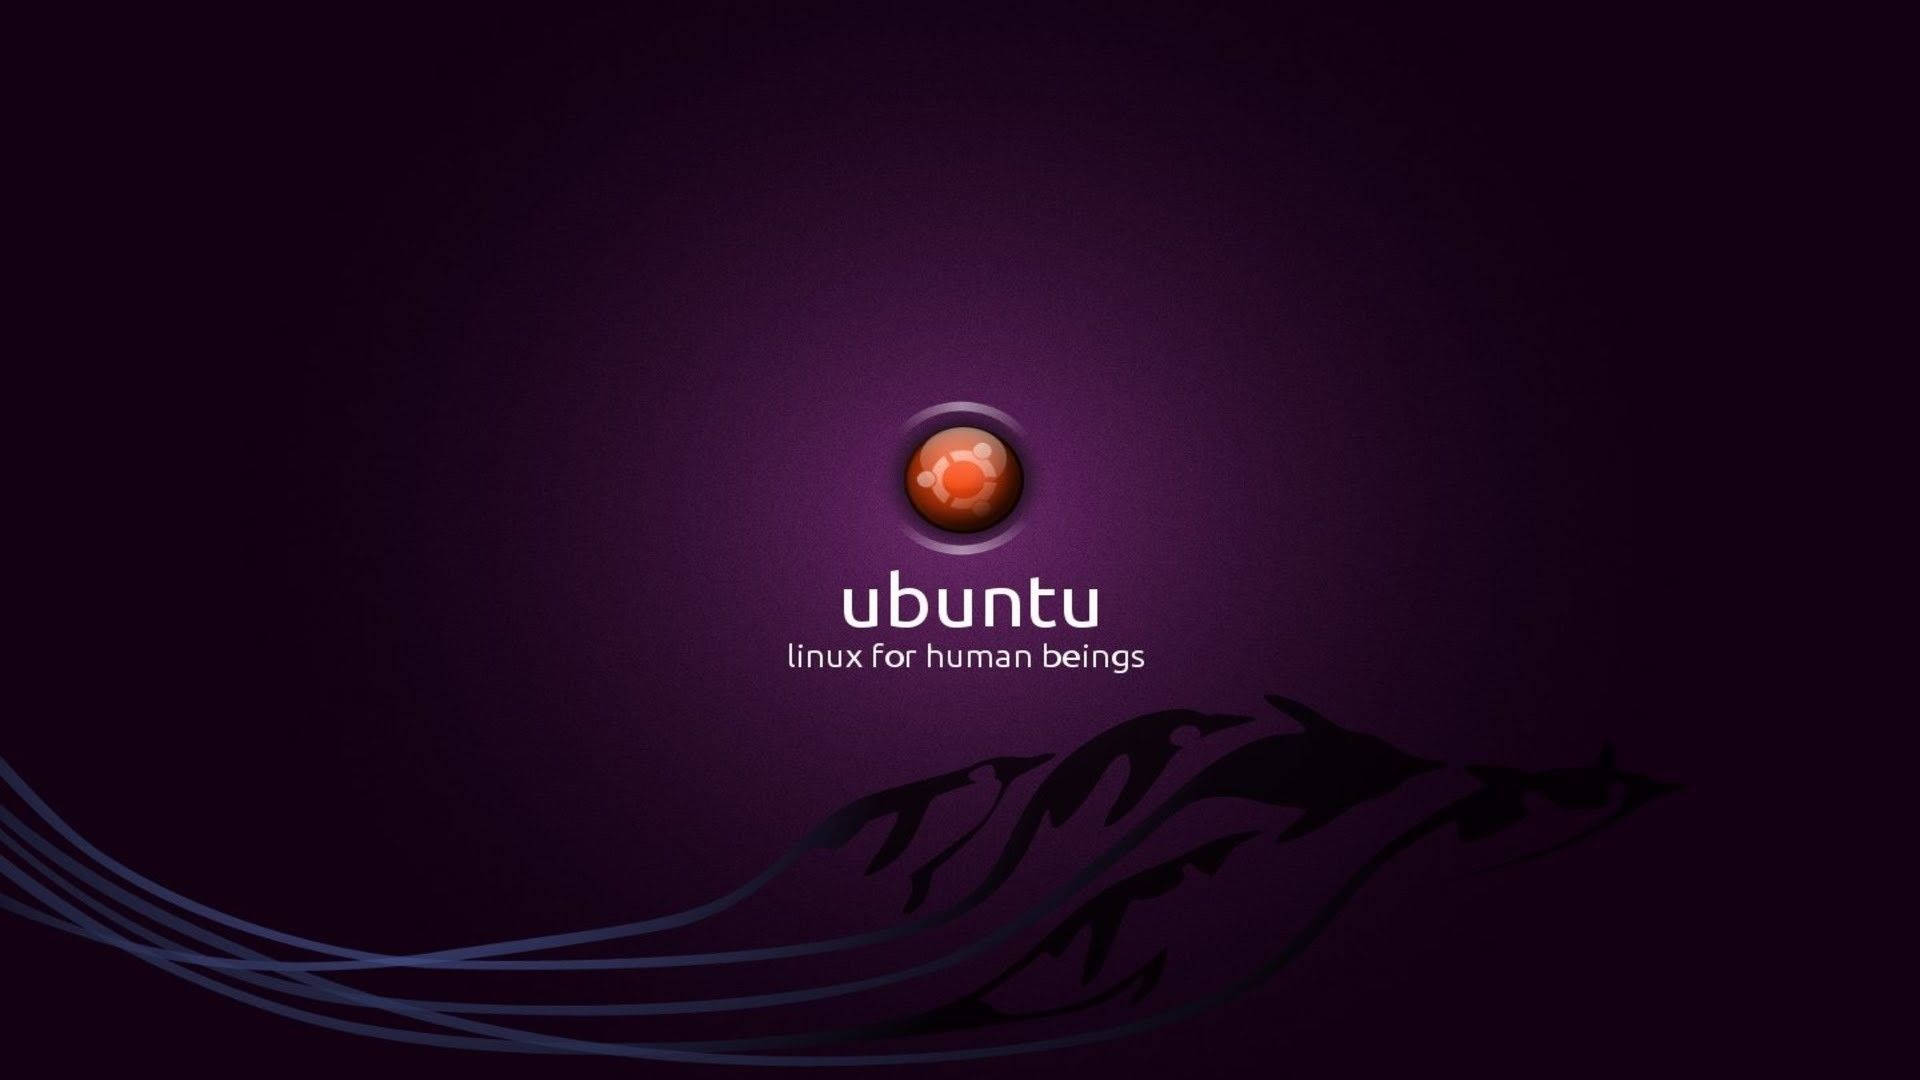 Ubuntu 1920X1080 Wallpaper and Background Image